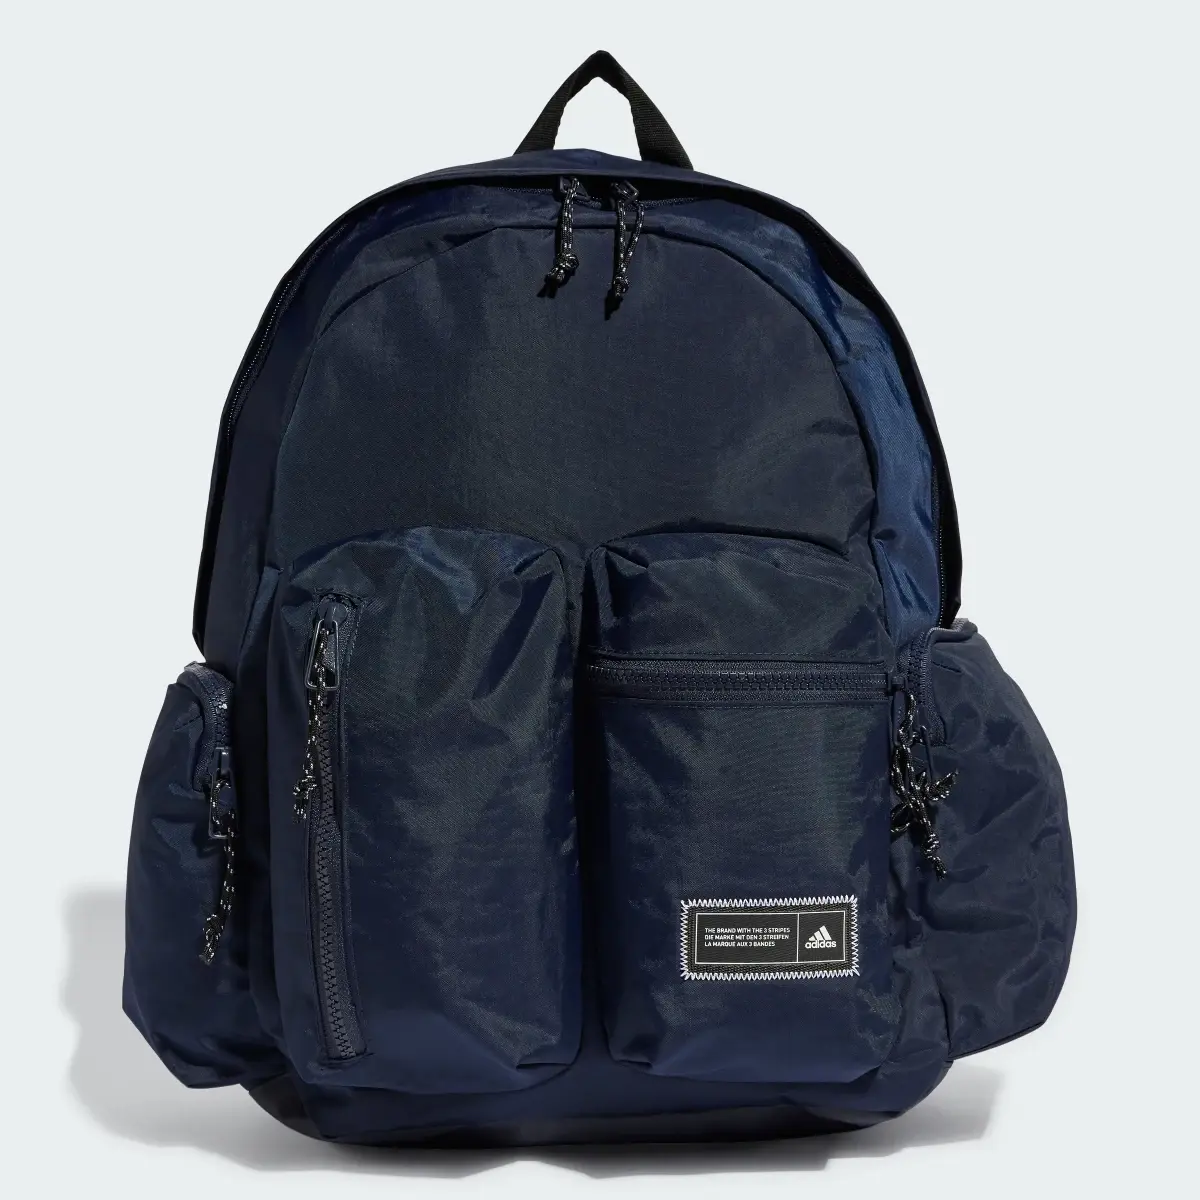 Adidas Back To University Classic Backpack. 2